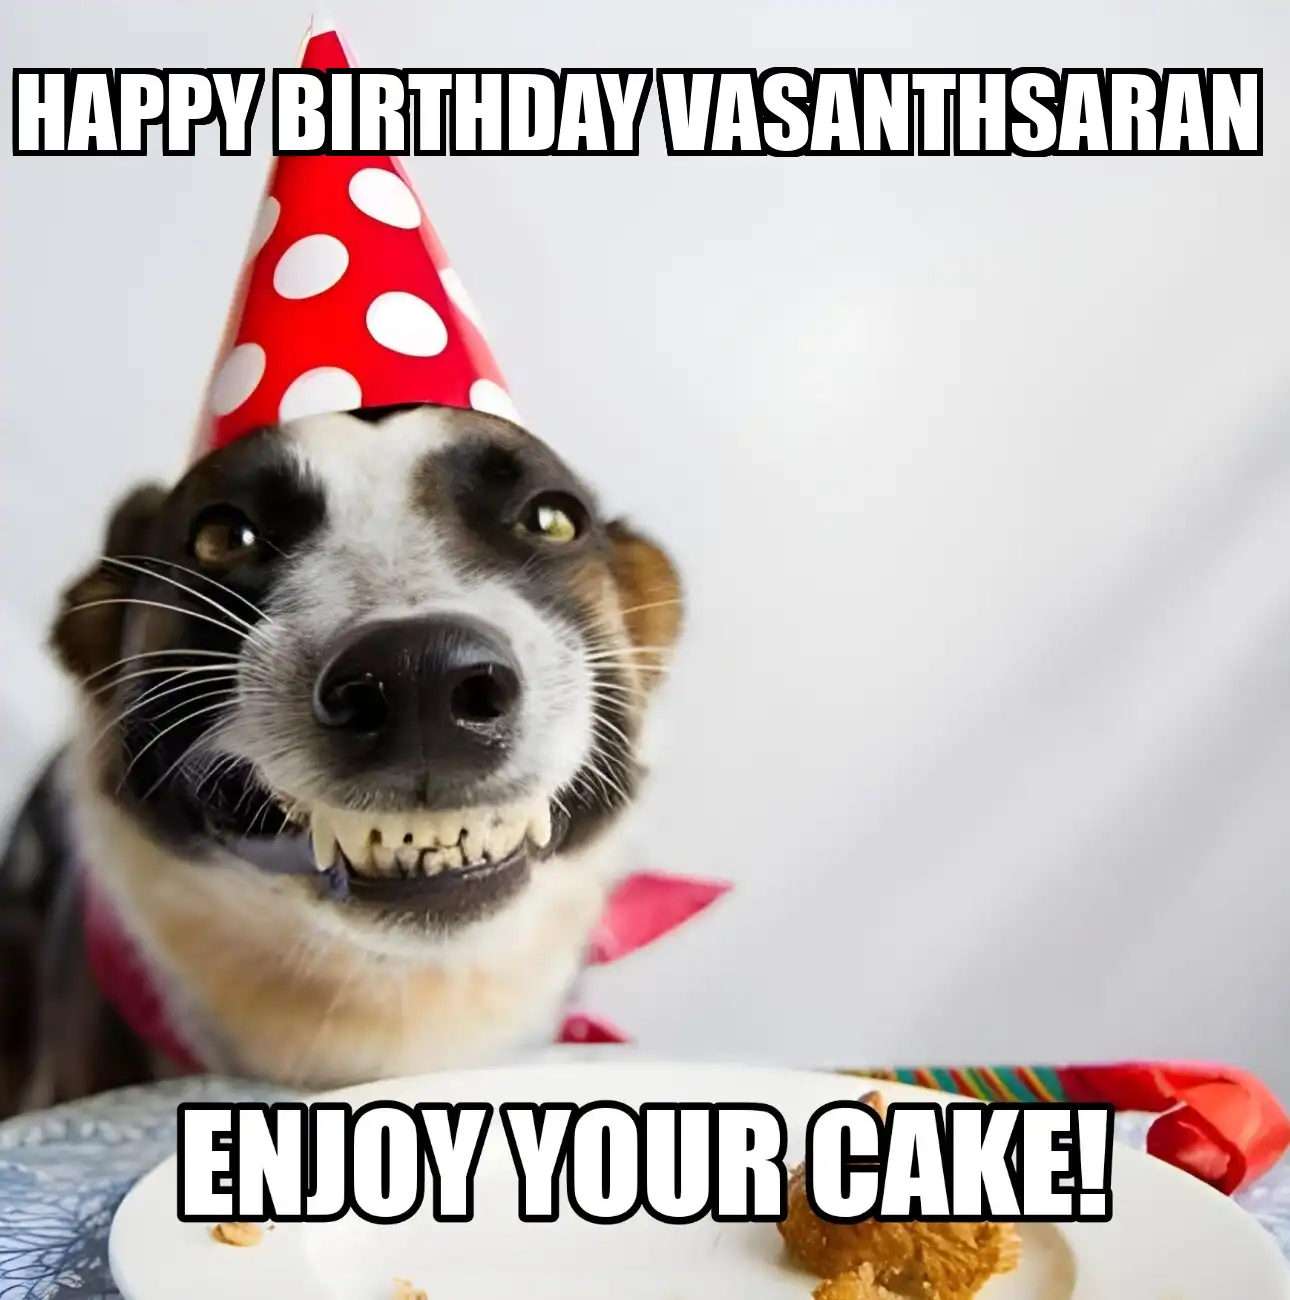 Happy Birthday Vasanthsaran Enjoy Your Cake Dog Meme